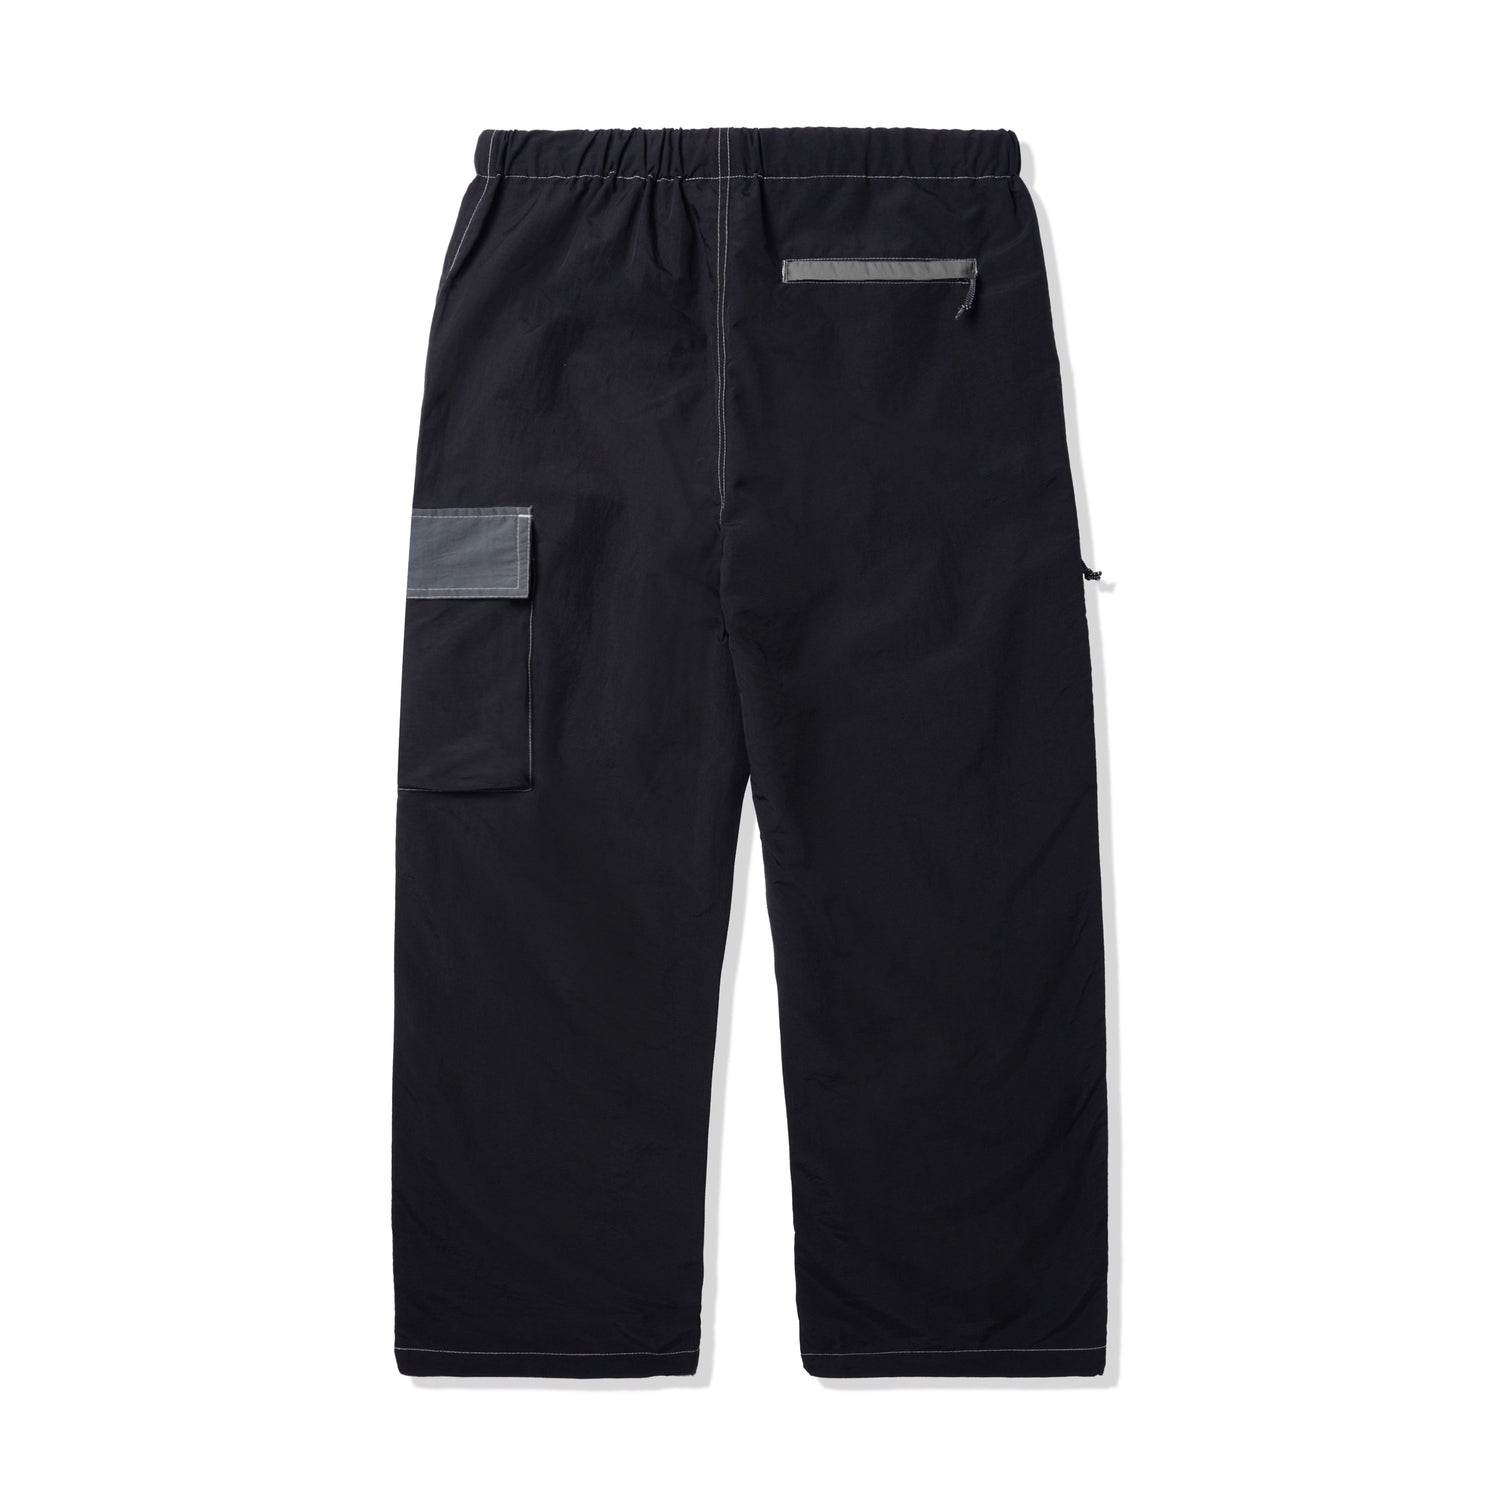 Navigate Climber Pants, Black / Dark Grey